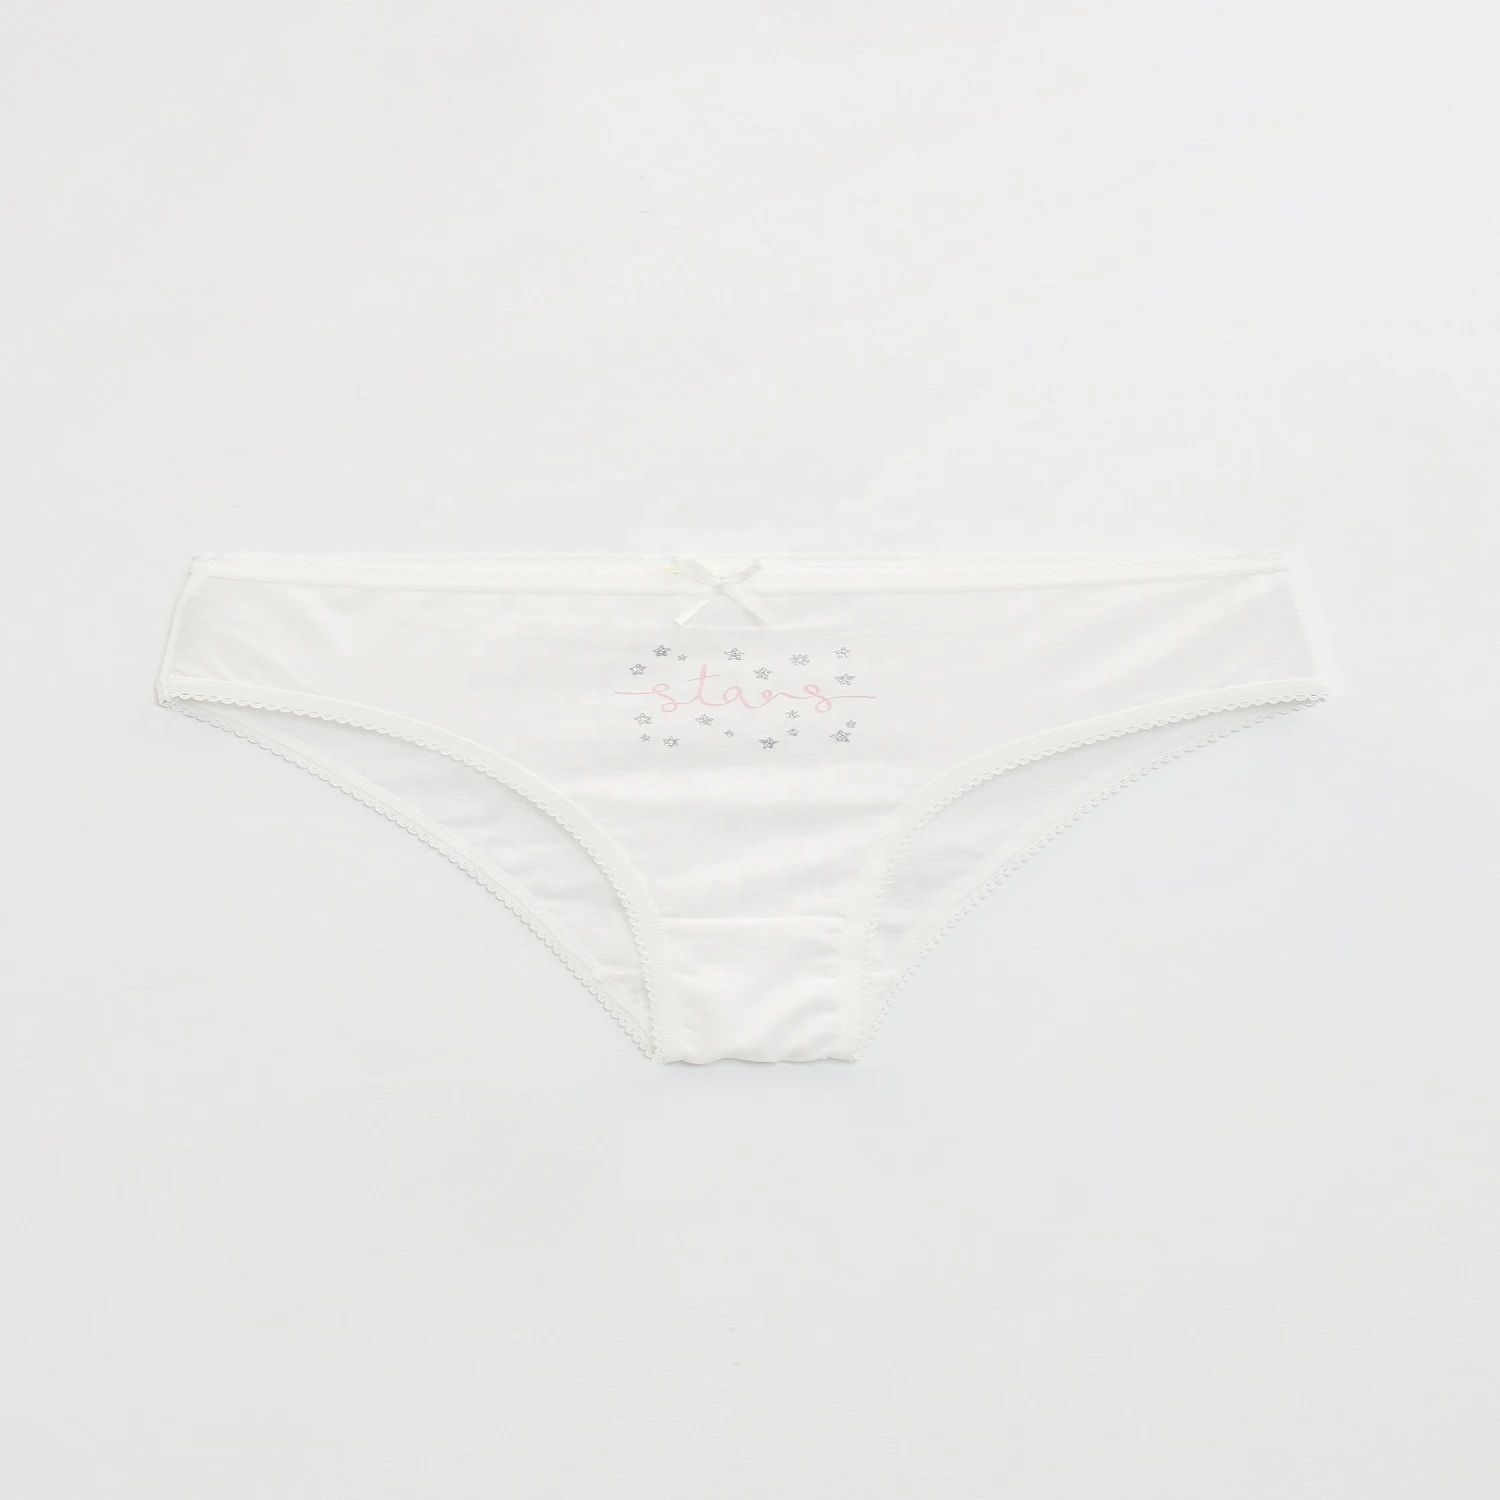 Girl Underwear Children Kids Printed 2-Pieces Set Panties